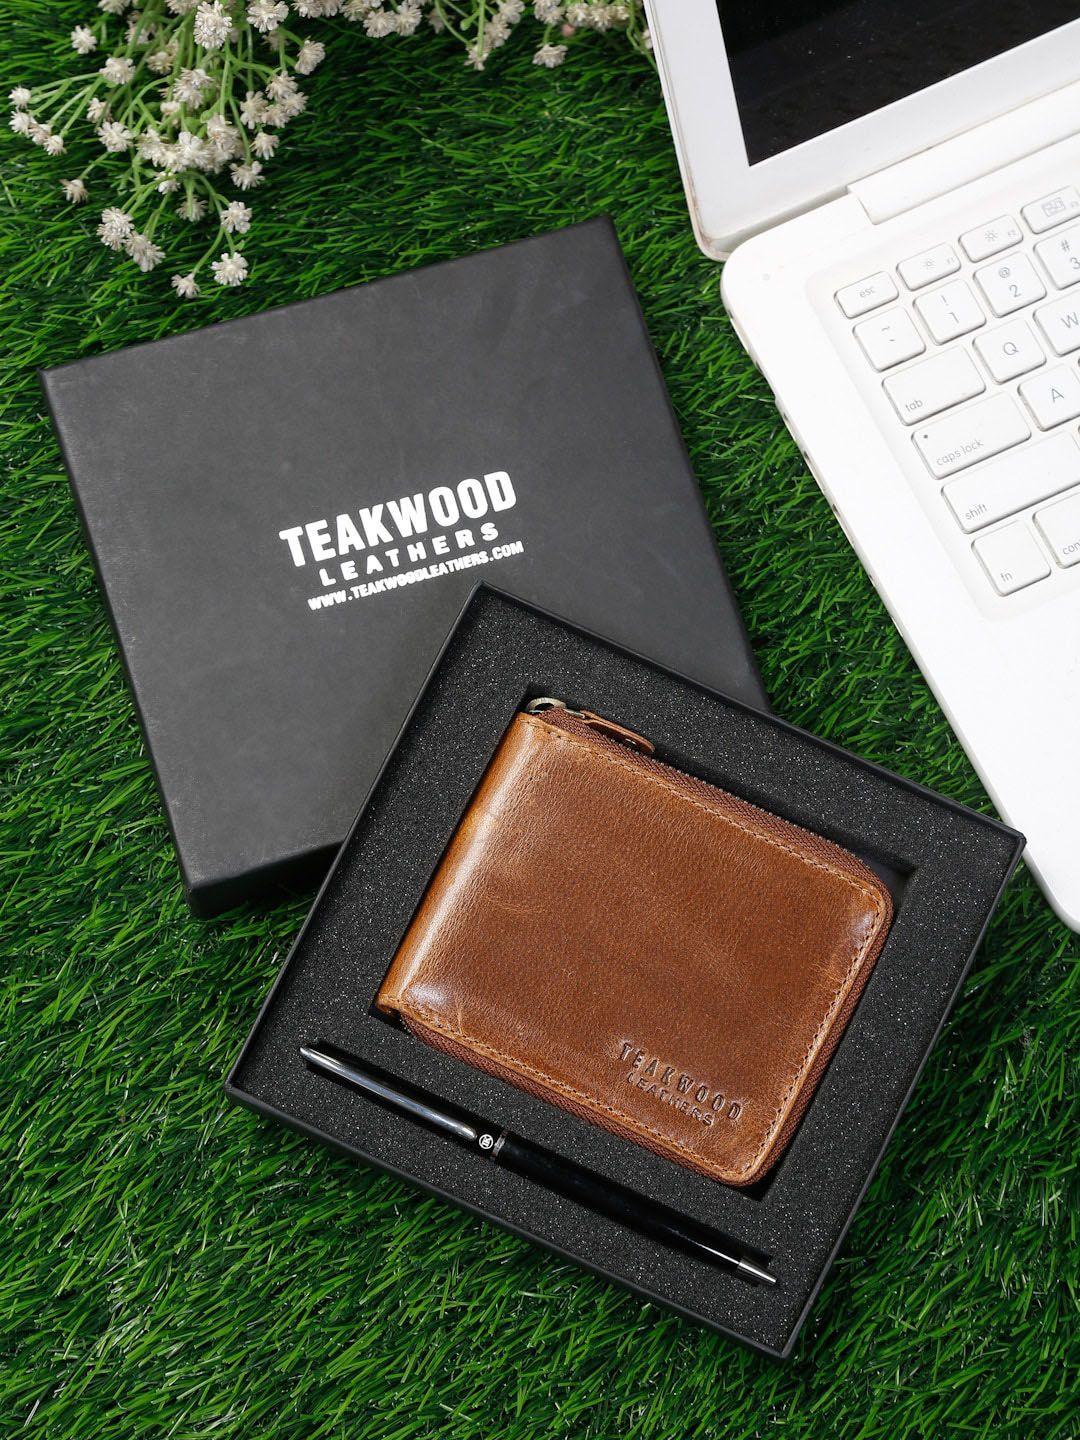 teakwood leathers men brown & black genuine leather accessory gift set